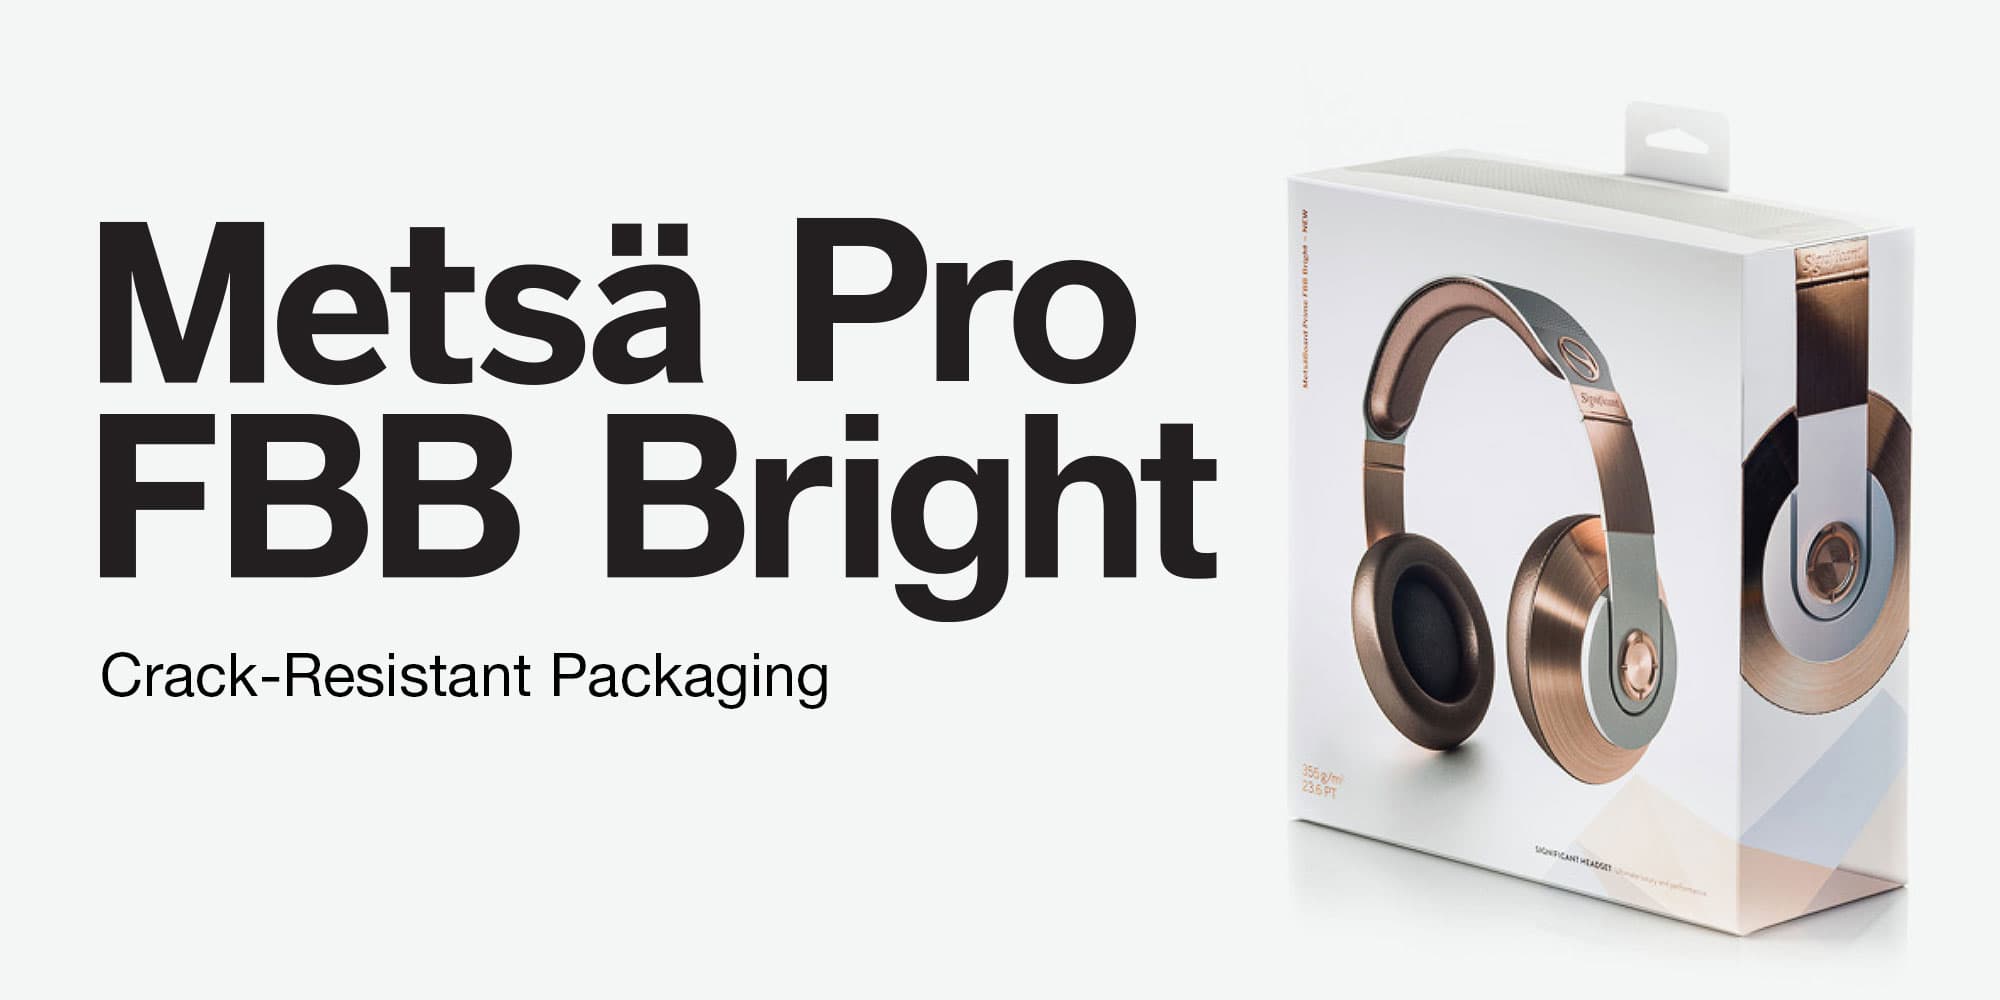 Metsa Pro FBB Bright Crack-Resistant Packaging